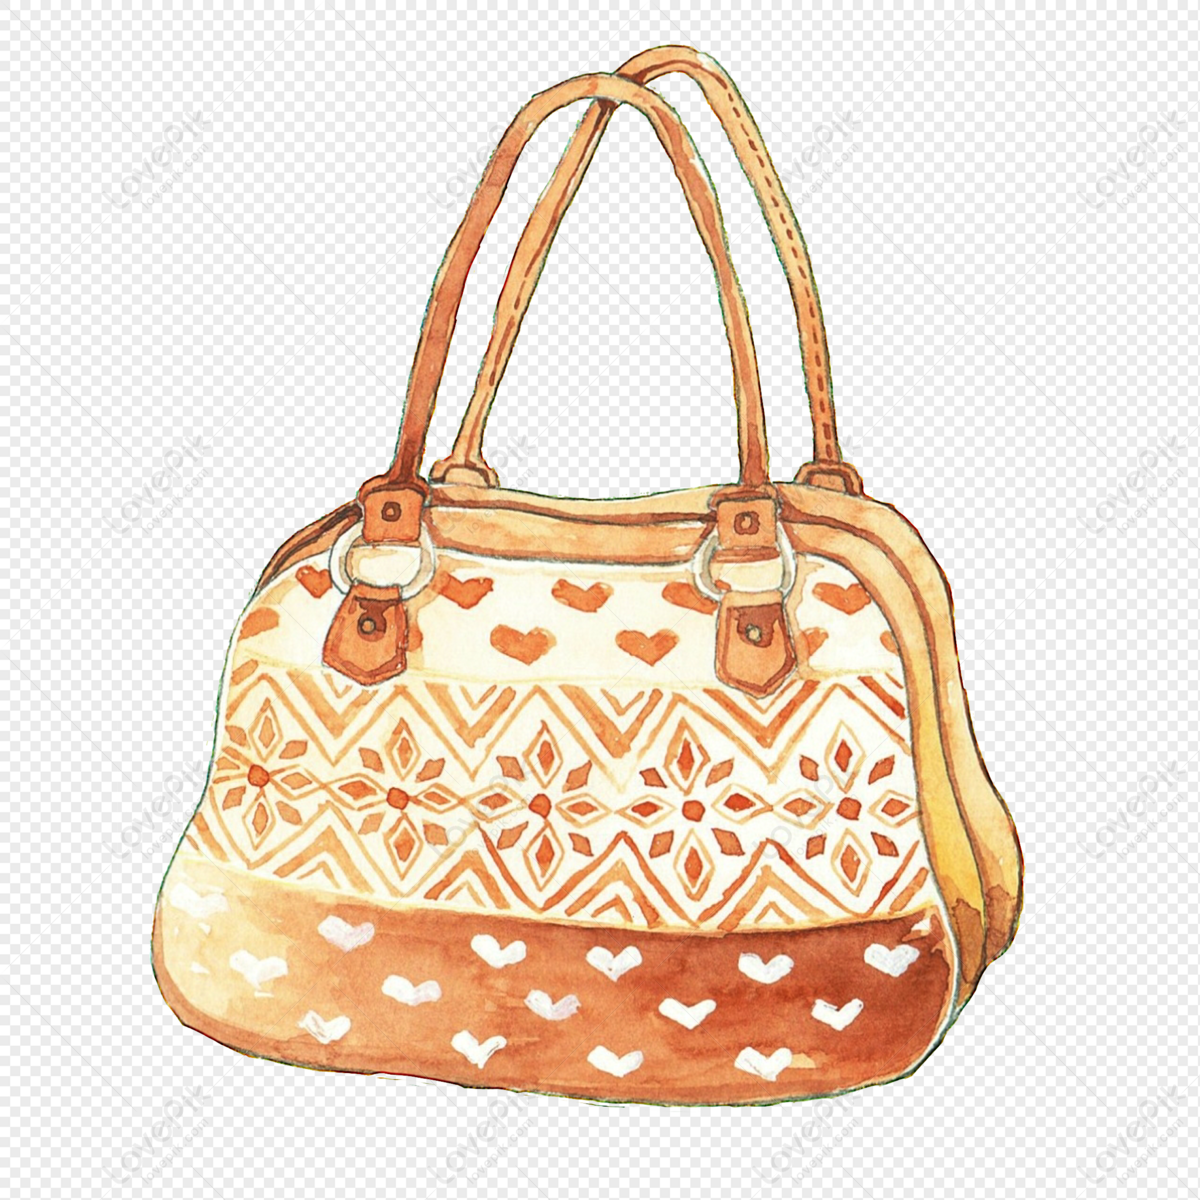 Fashion Bags PNG Transparent, Fashion Female Bag, Bag, Luxury, Women Bag PNG  Image For Free Download